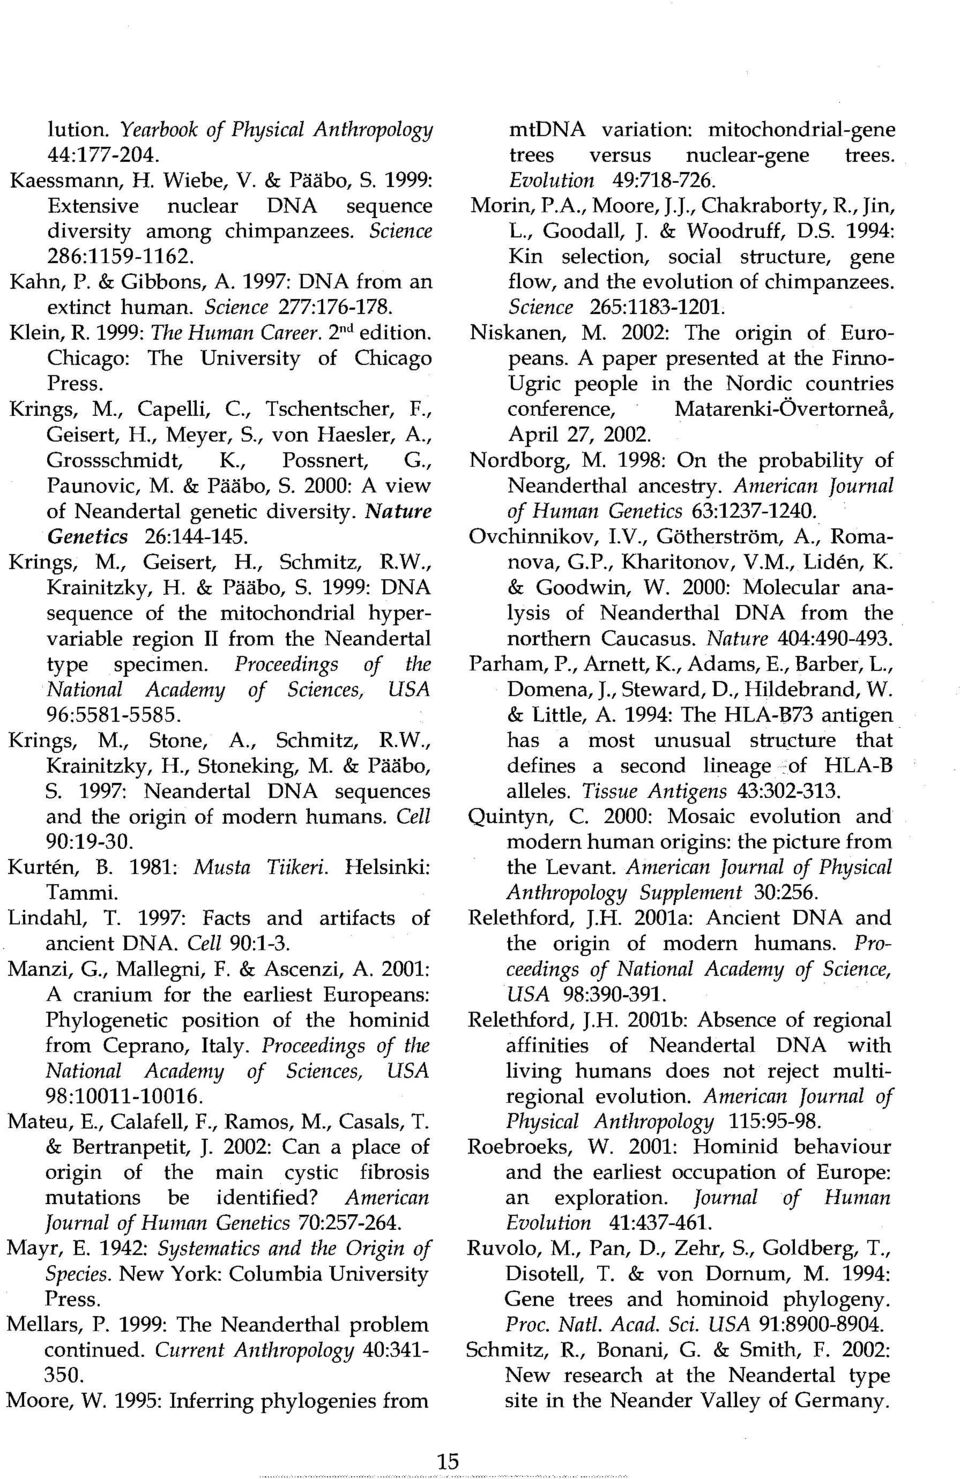 , Geisert, H., Meyer, S., von Haesler, A., Grossschmidt, K, Possnert, G., Paunovic, M. & Pääbo, S. 2000: A view of Neandertal genetic diversity. Nature Genetics 26:144-145. Krings, M.